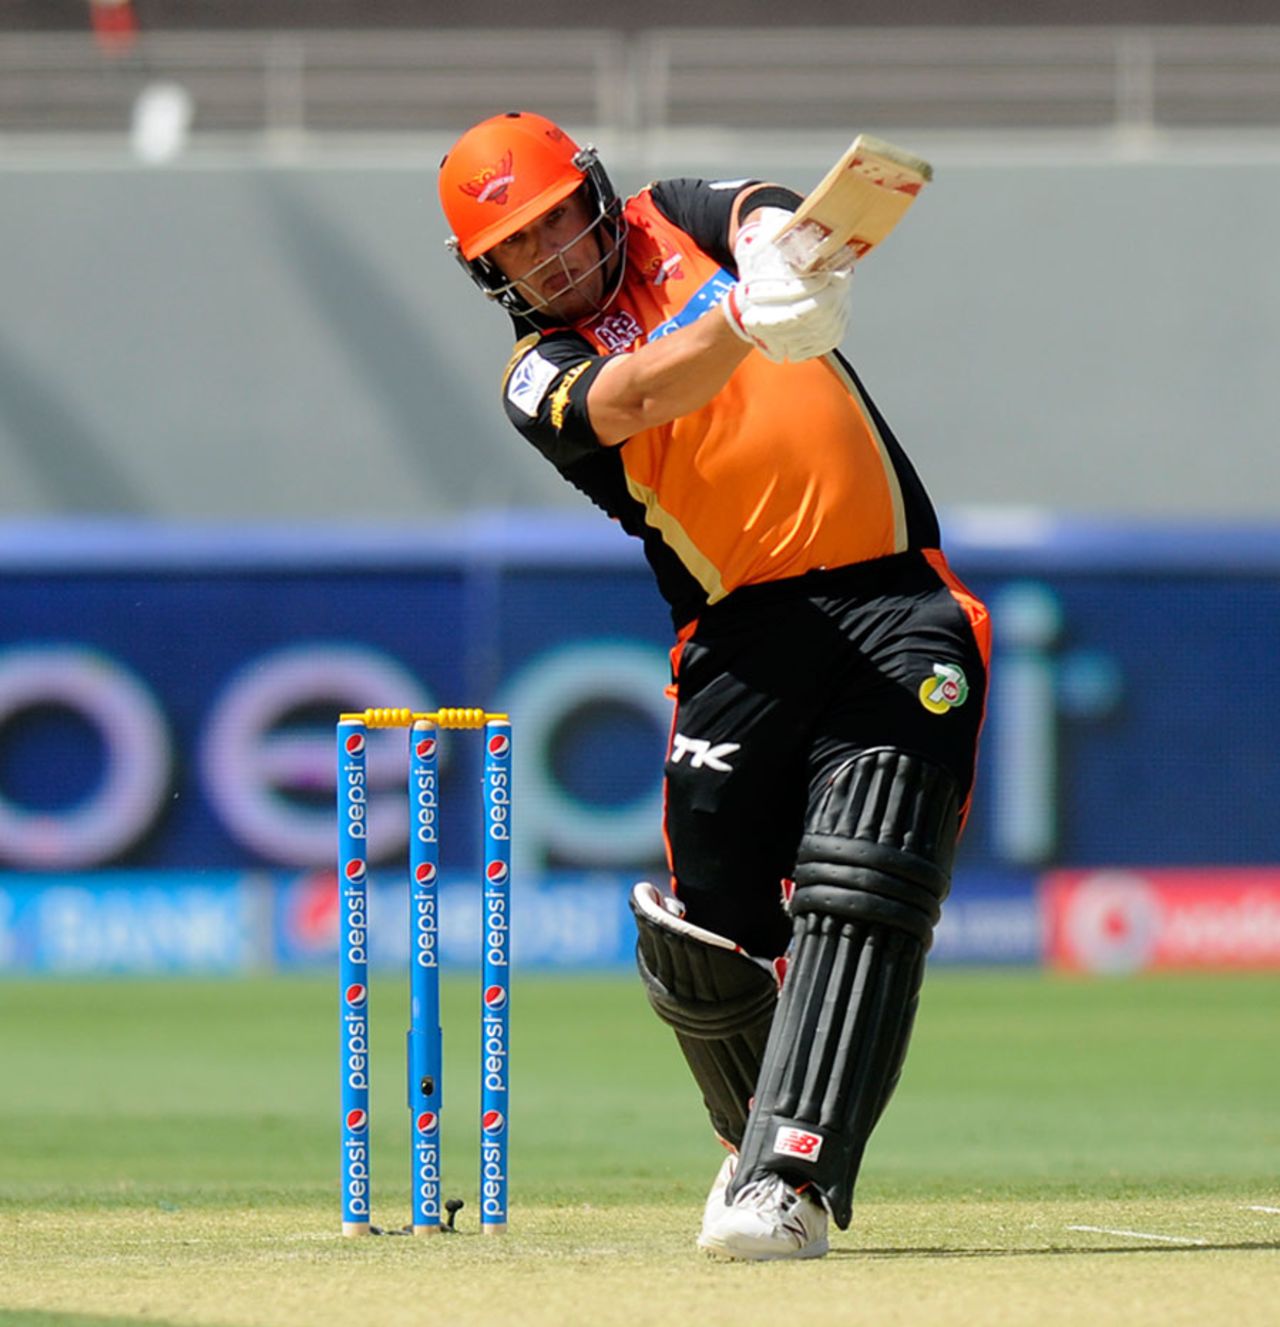 Aaron Finch steps out for a big hit, Sunrisers Hyderabad v Delhi Daredevils, IPL 2014, Dubai, April 25, 2014